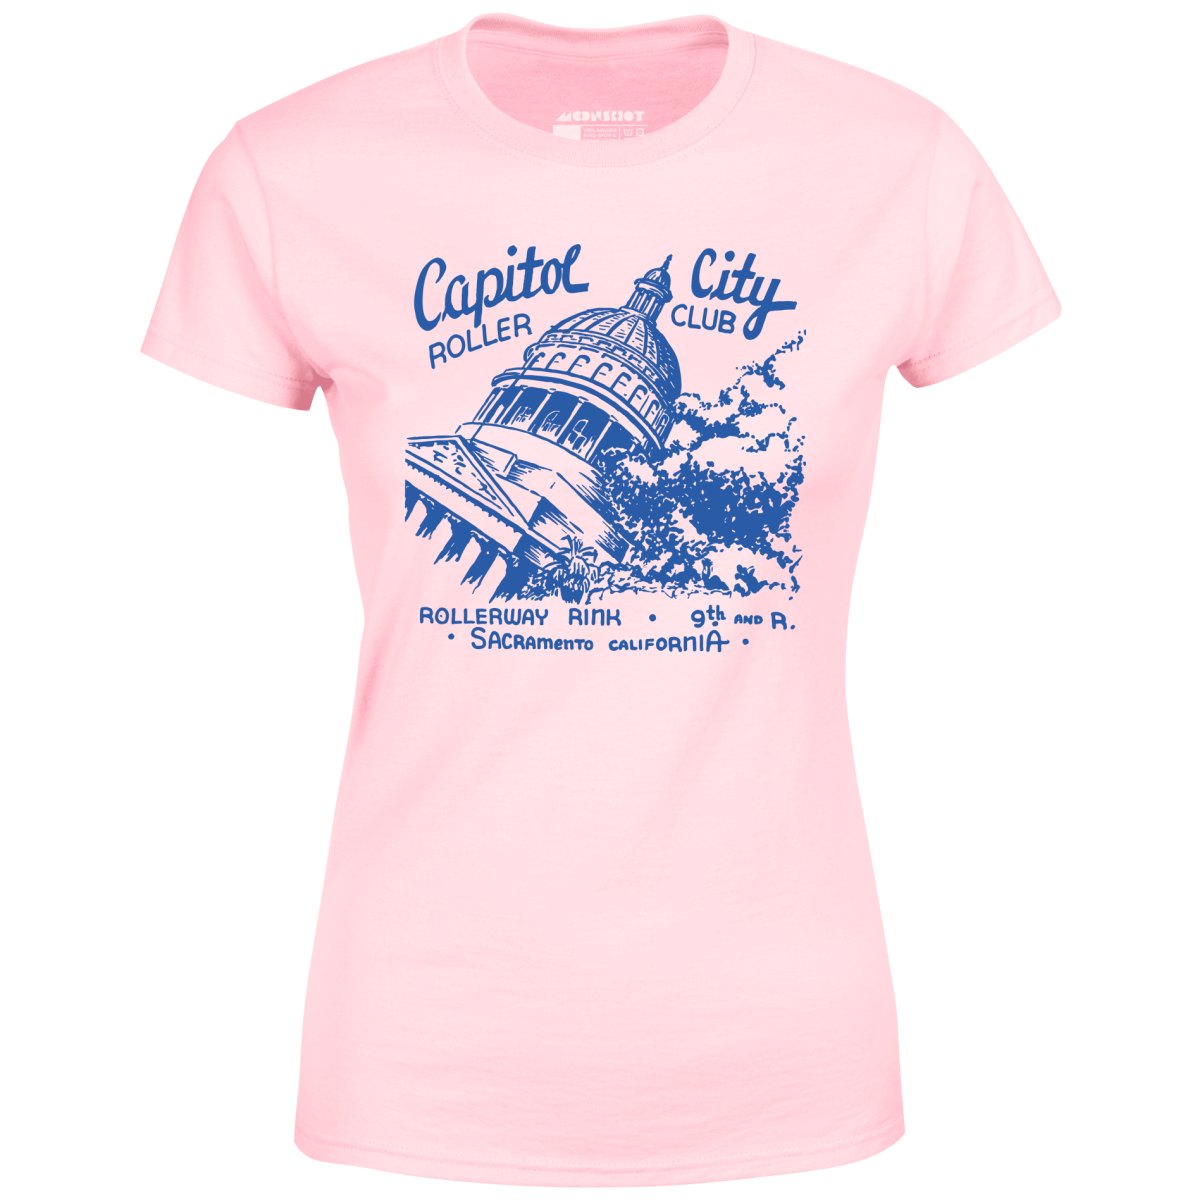 Capitol City Roller Club - Sacramento, CA - Vintage Roller Rink - Women's T-Shirt